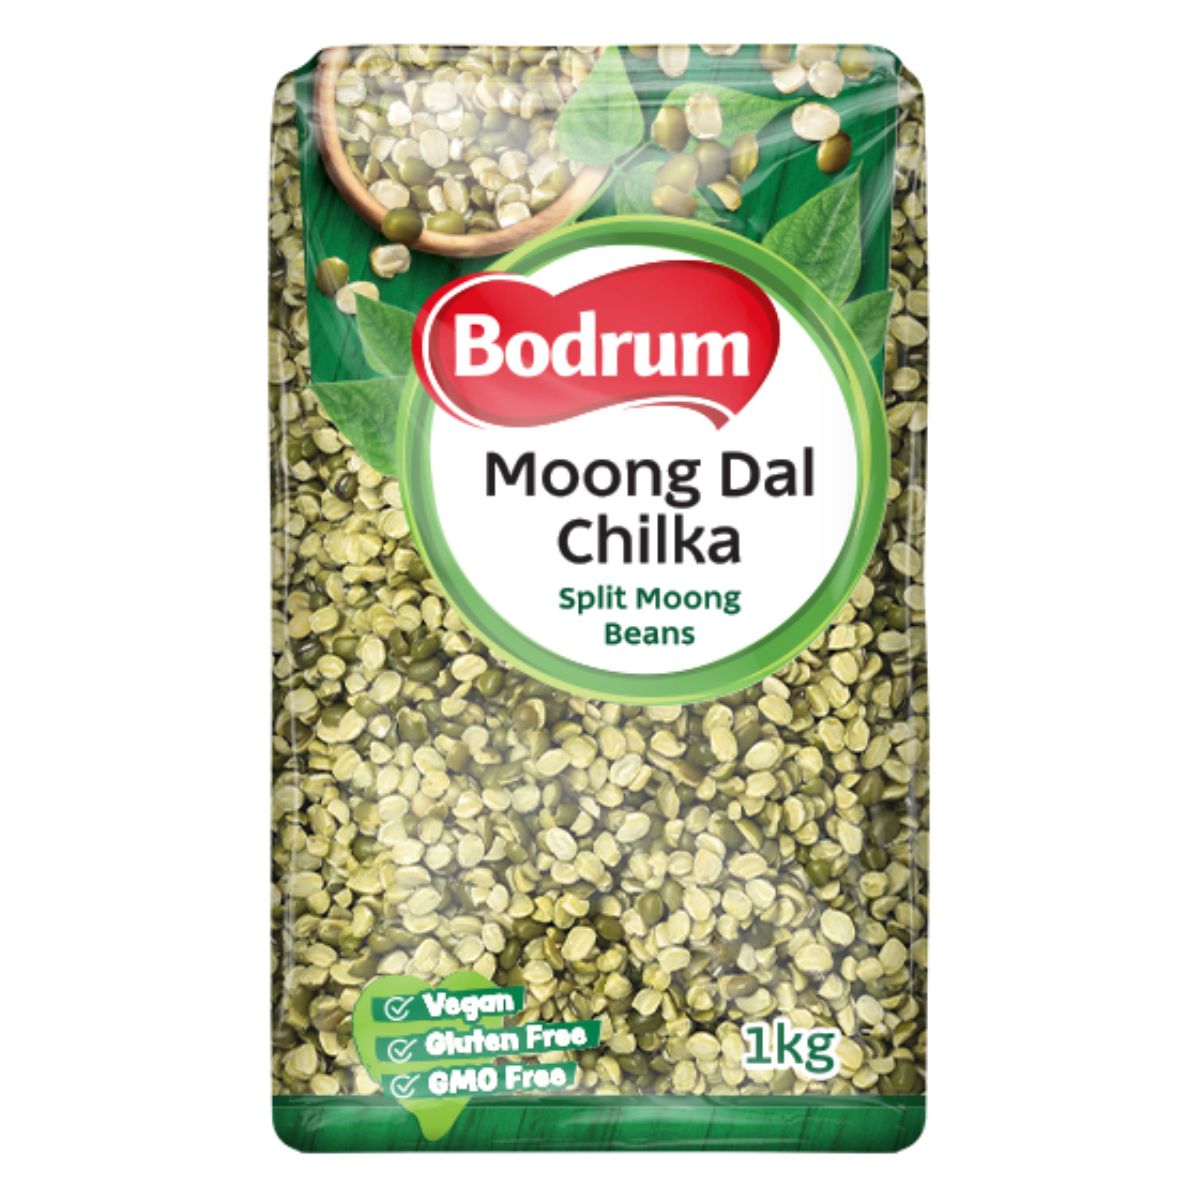 Bodrum - Moong Dal Chilka - 1kg moong dal chika.